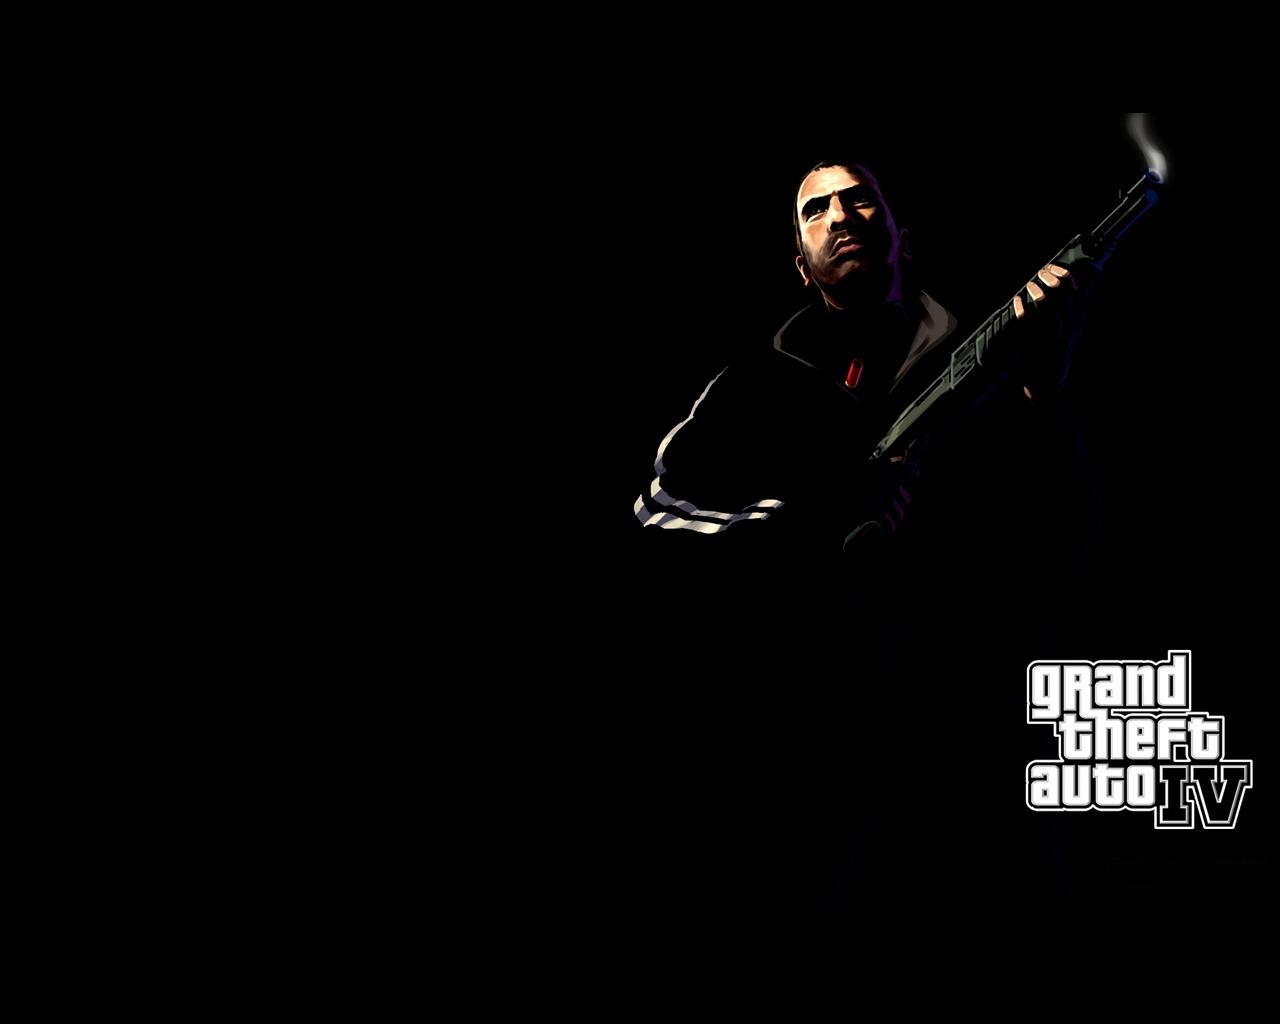 GTA IV DLC expansion pack Grand Theft Auto 4 HD Wallpapers Album ListPage1   10wallpapercom